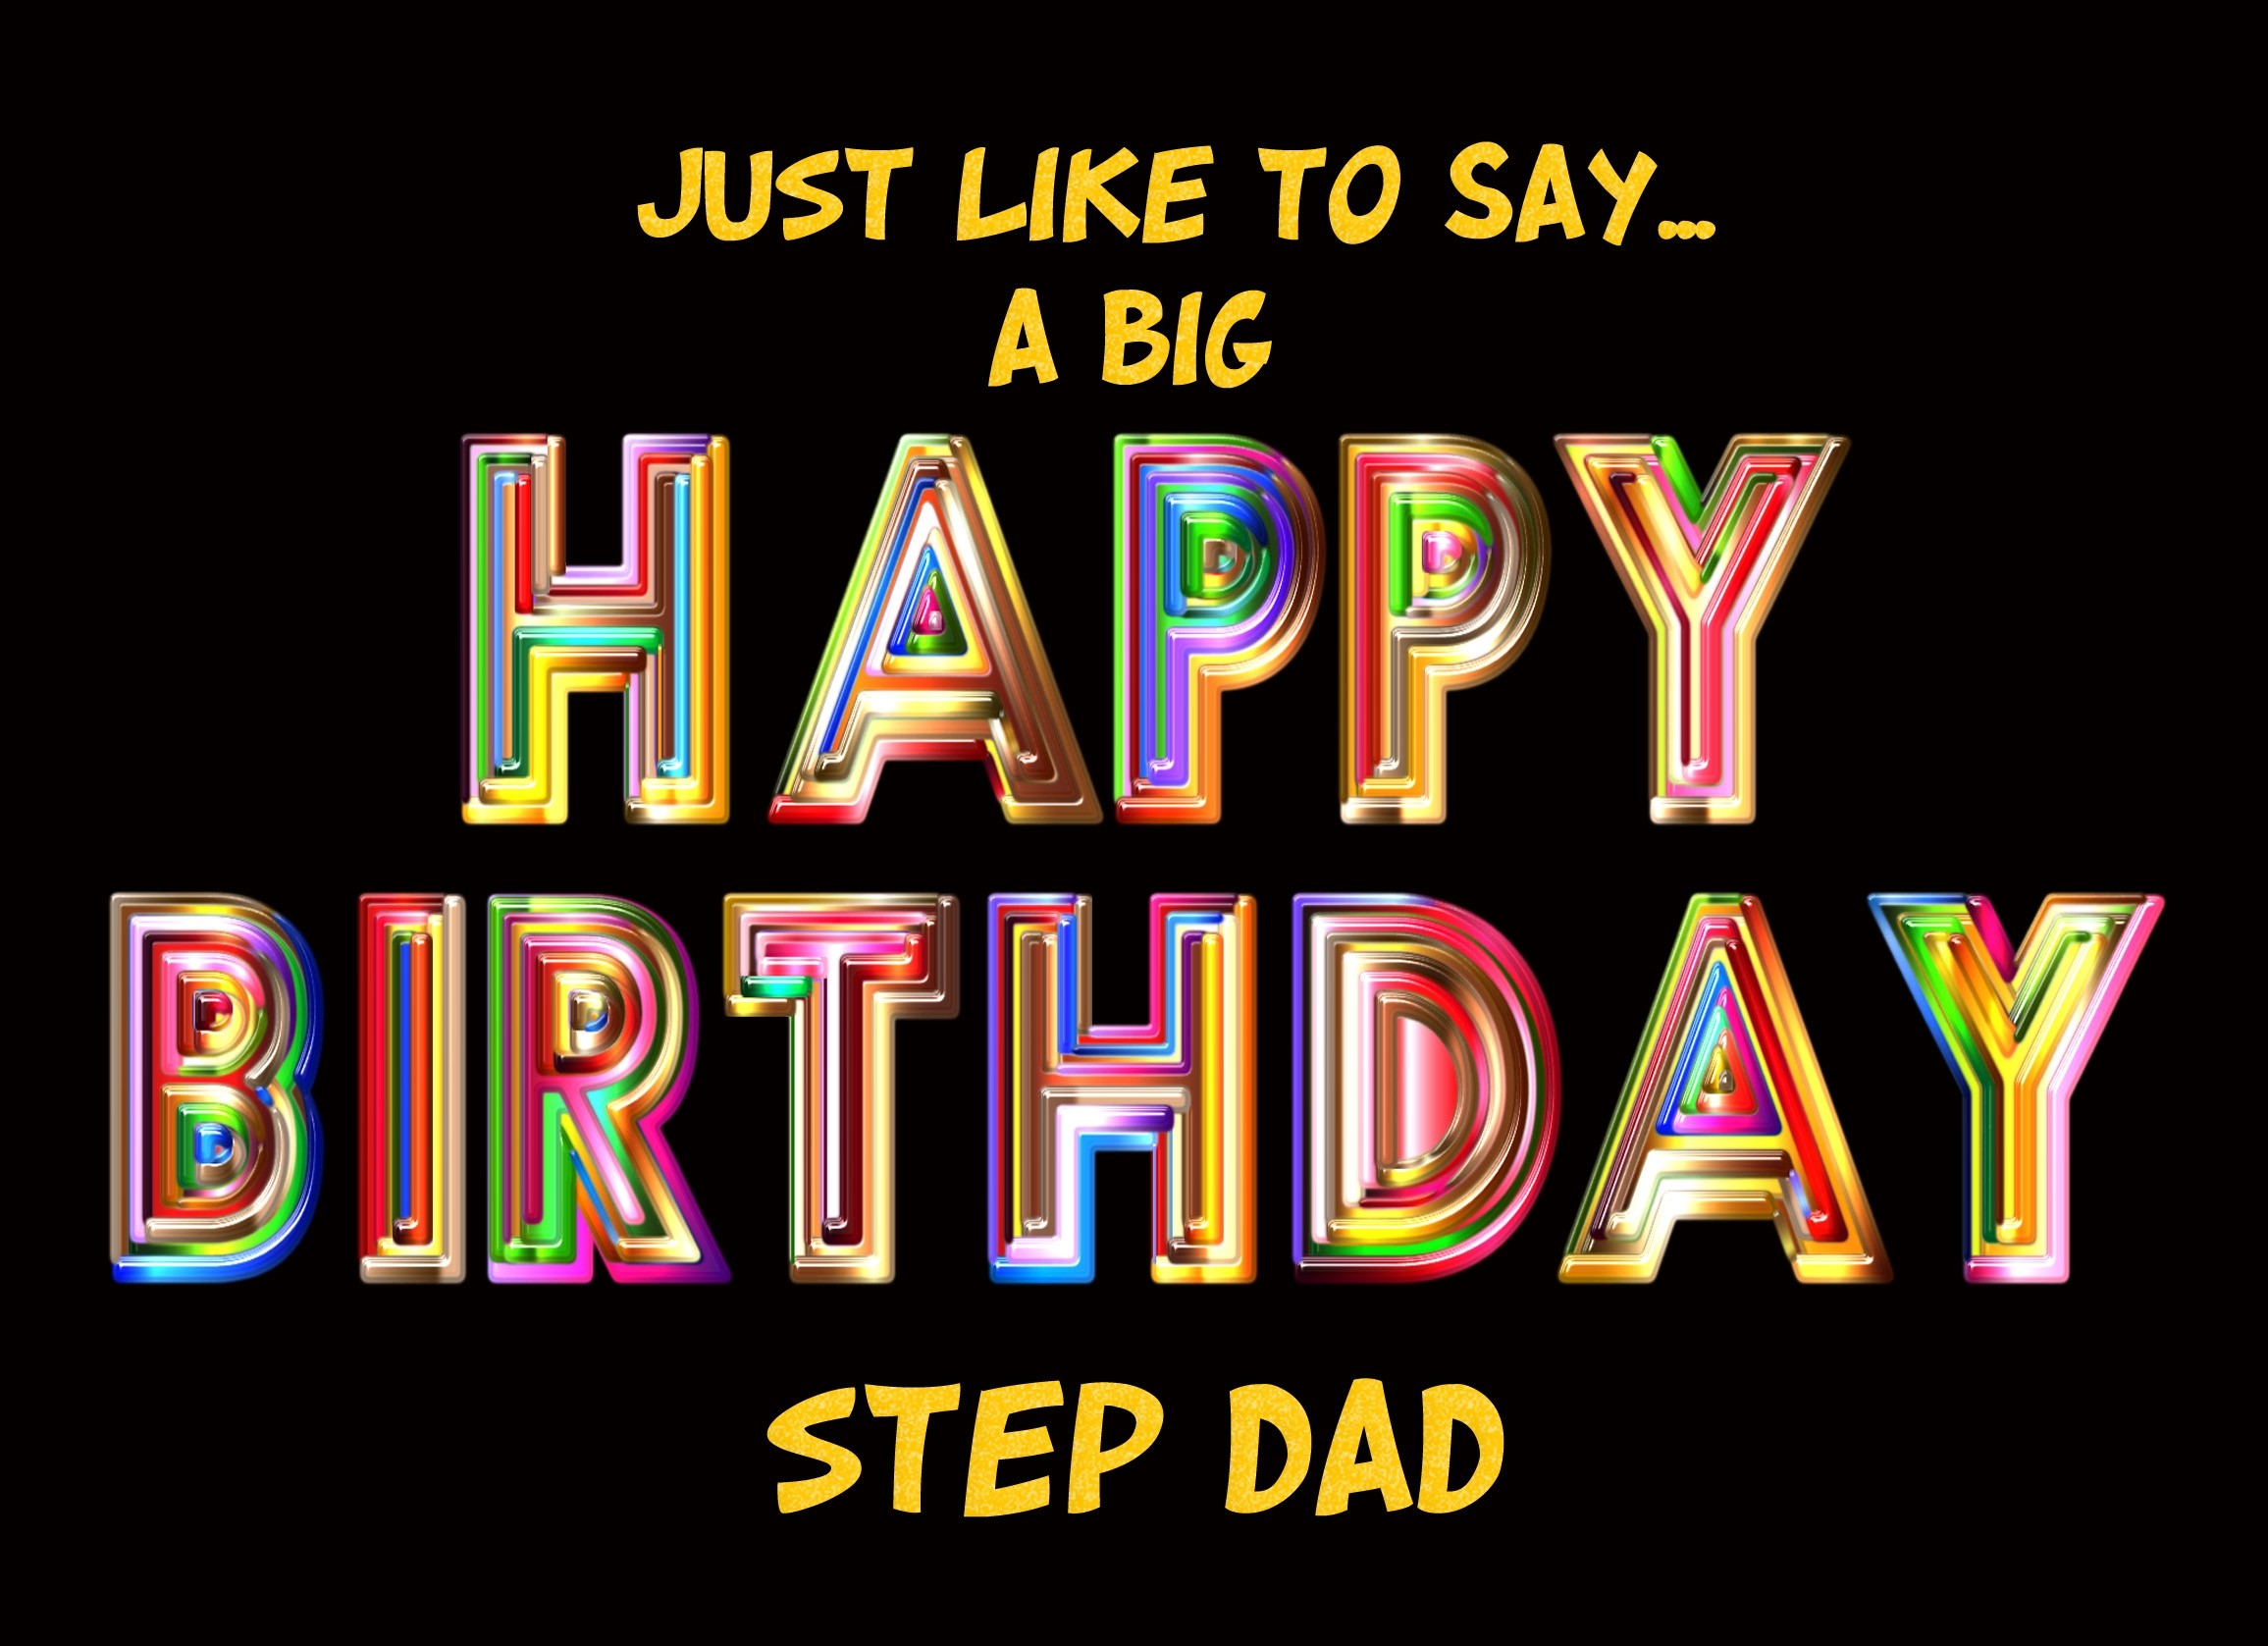 Happy Birthday 'Step Dad' Greeting Card